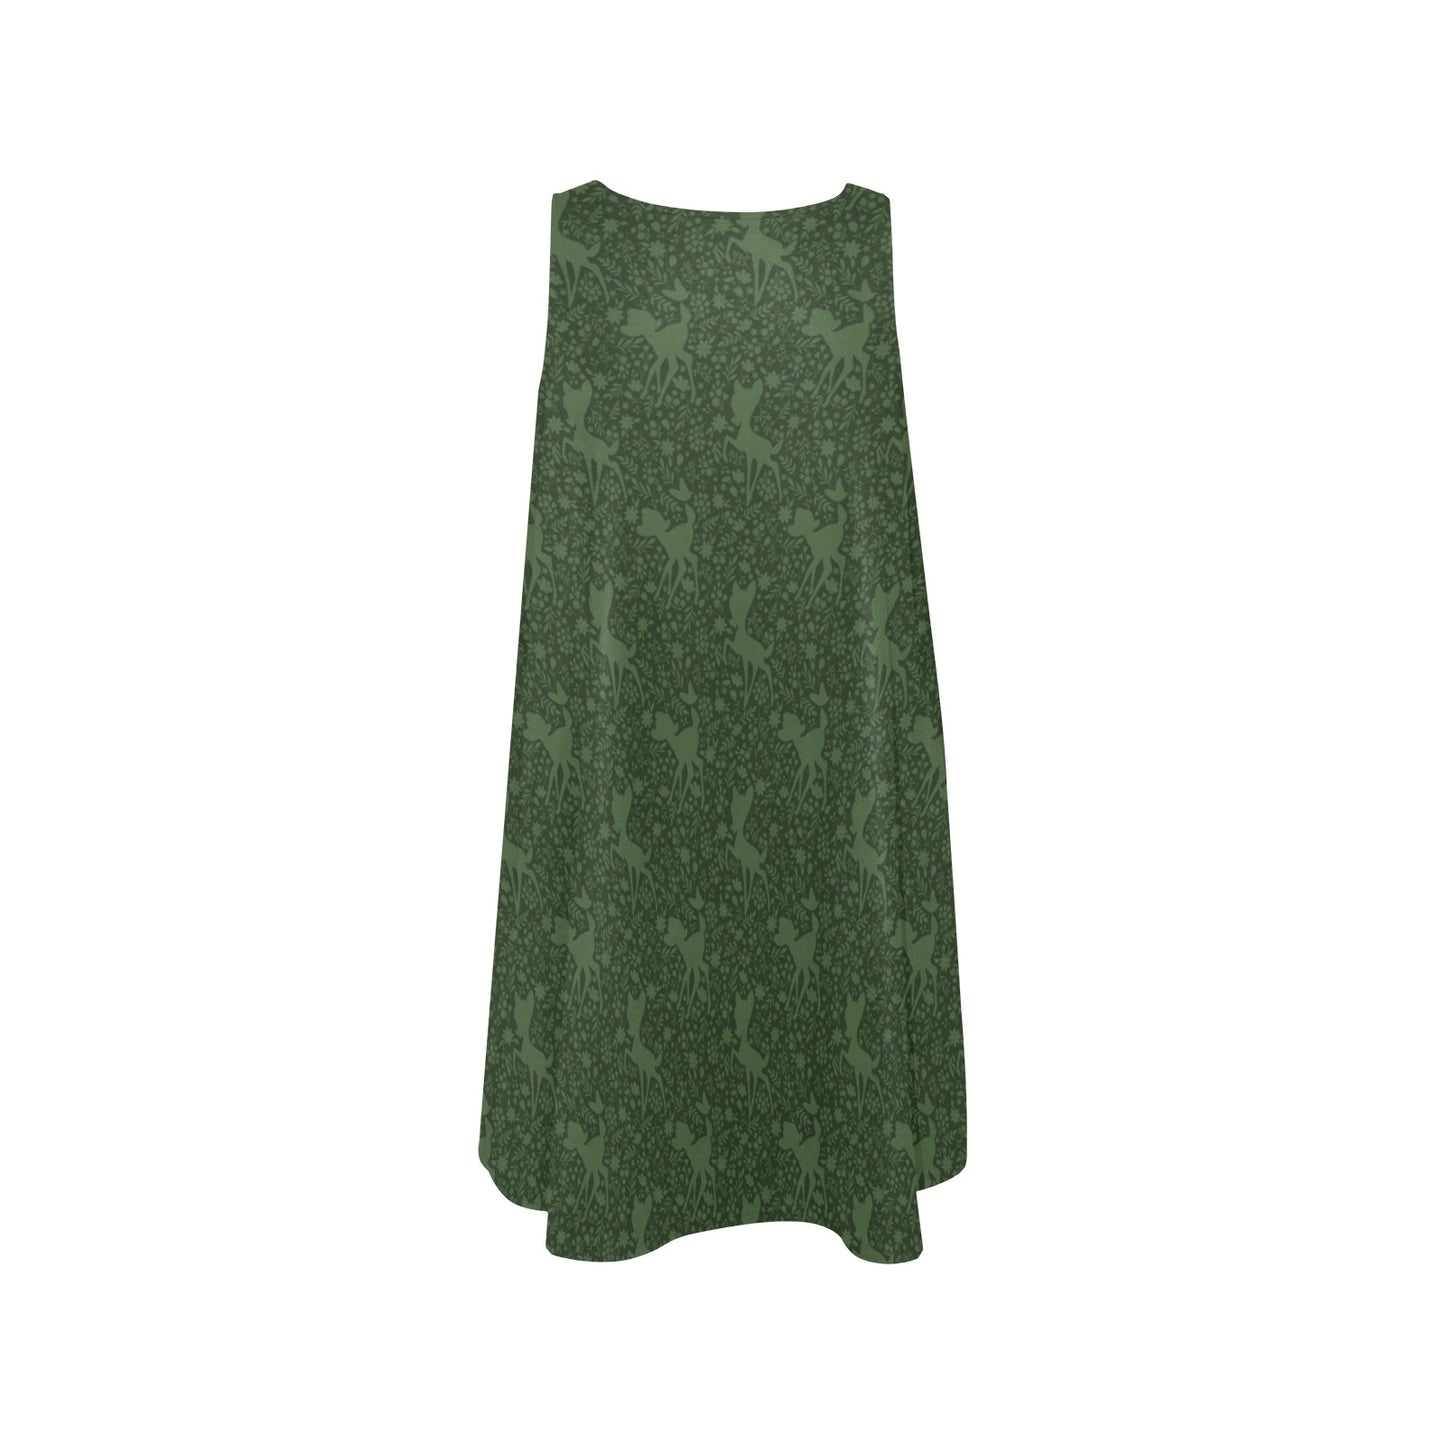 Forest Silhouette Sleeveless A-Line Pocket Dress